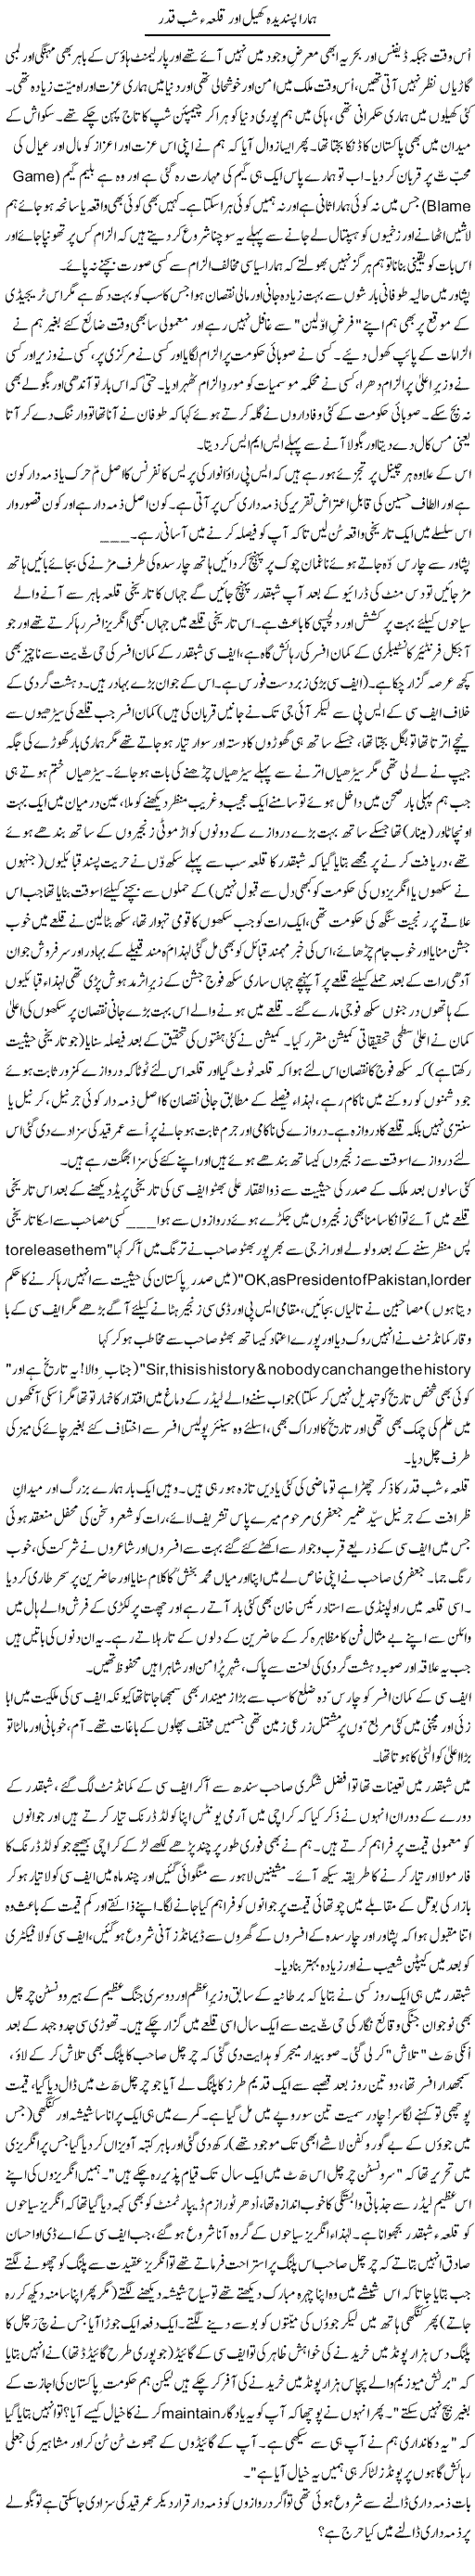 Hamara Pasandeeda Khel Aur Qilah Shab Qader | Zulfiqar Ahmed Cheema | Daily Urdu Columns